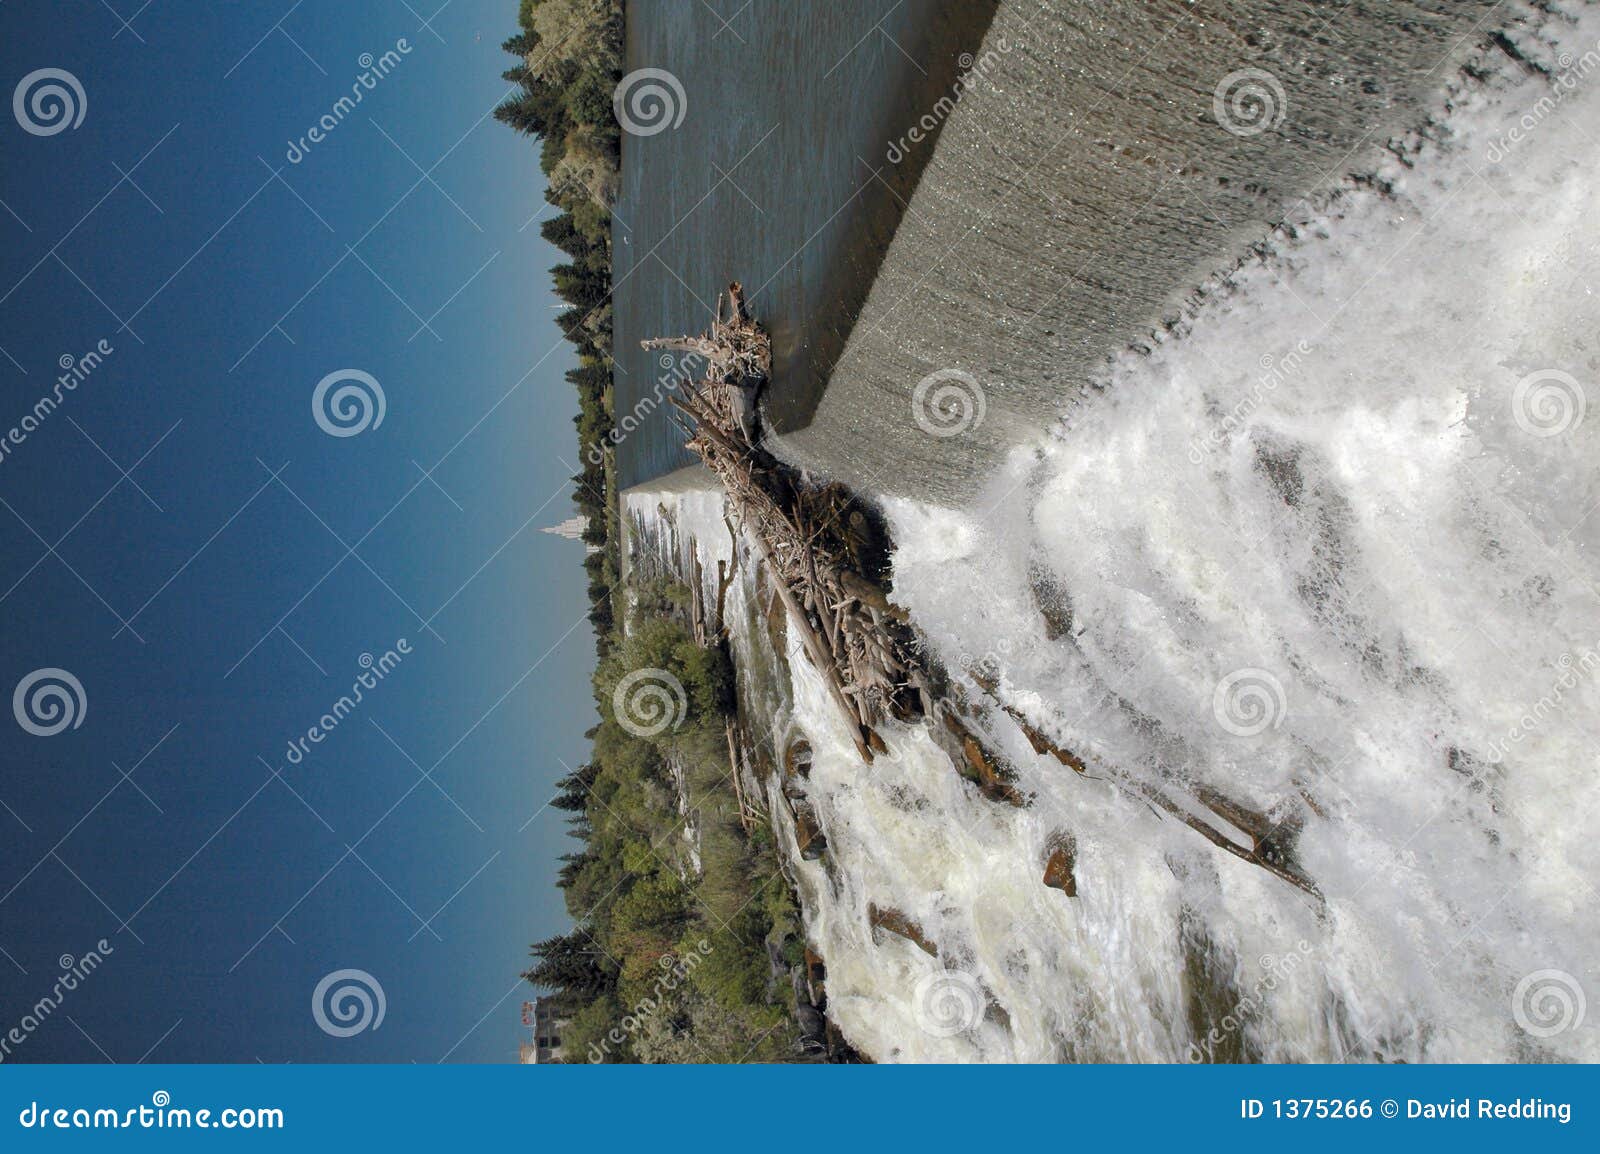 Idaho Falls Waterfall Royalty Free Stock Image - Image: 1375266